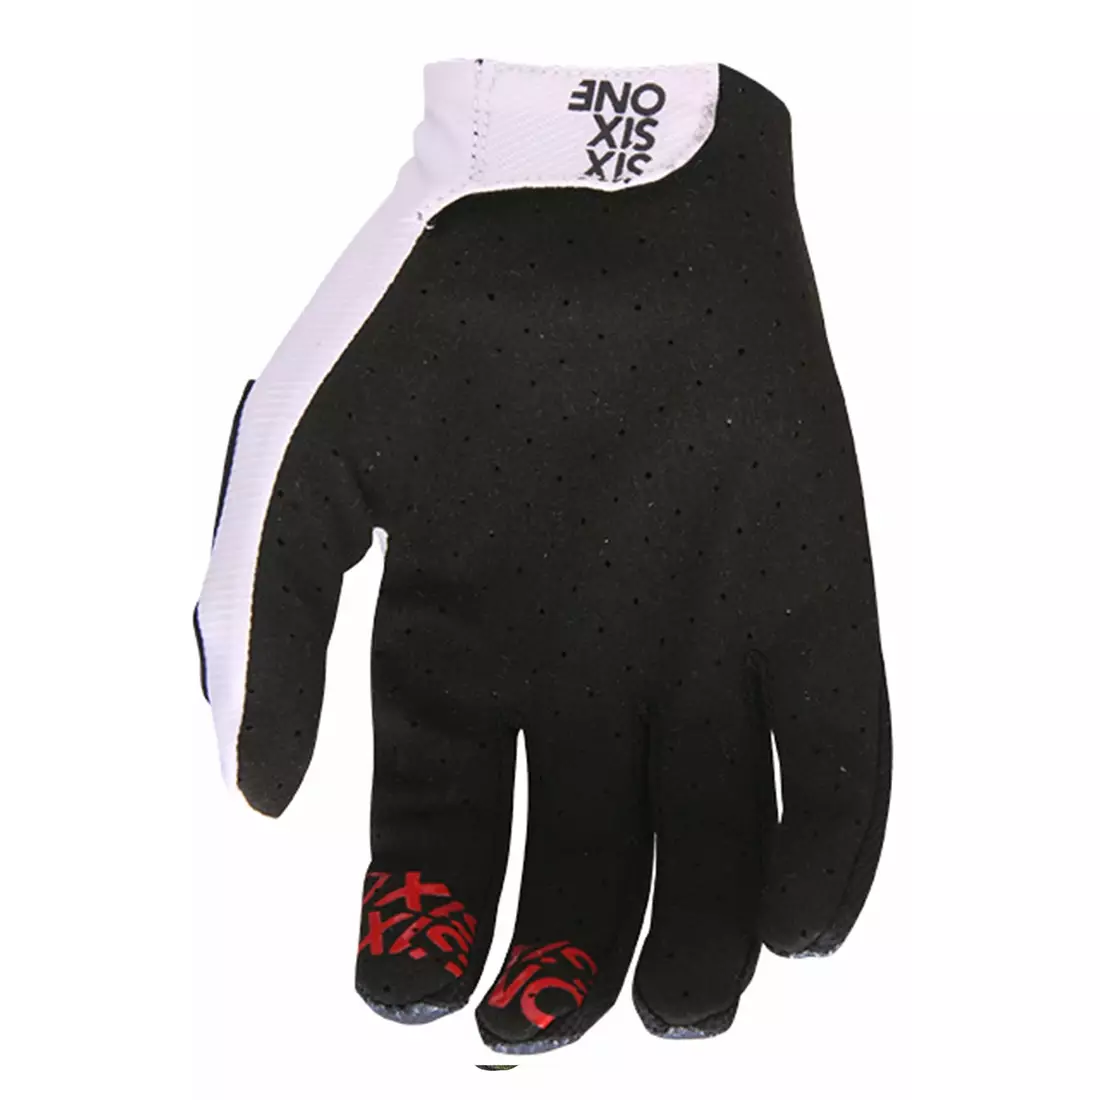 661 cycling gloves RAJI black and white